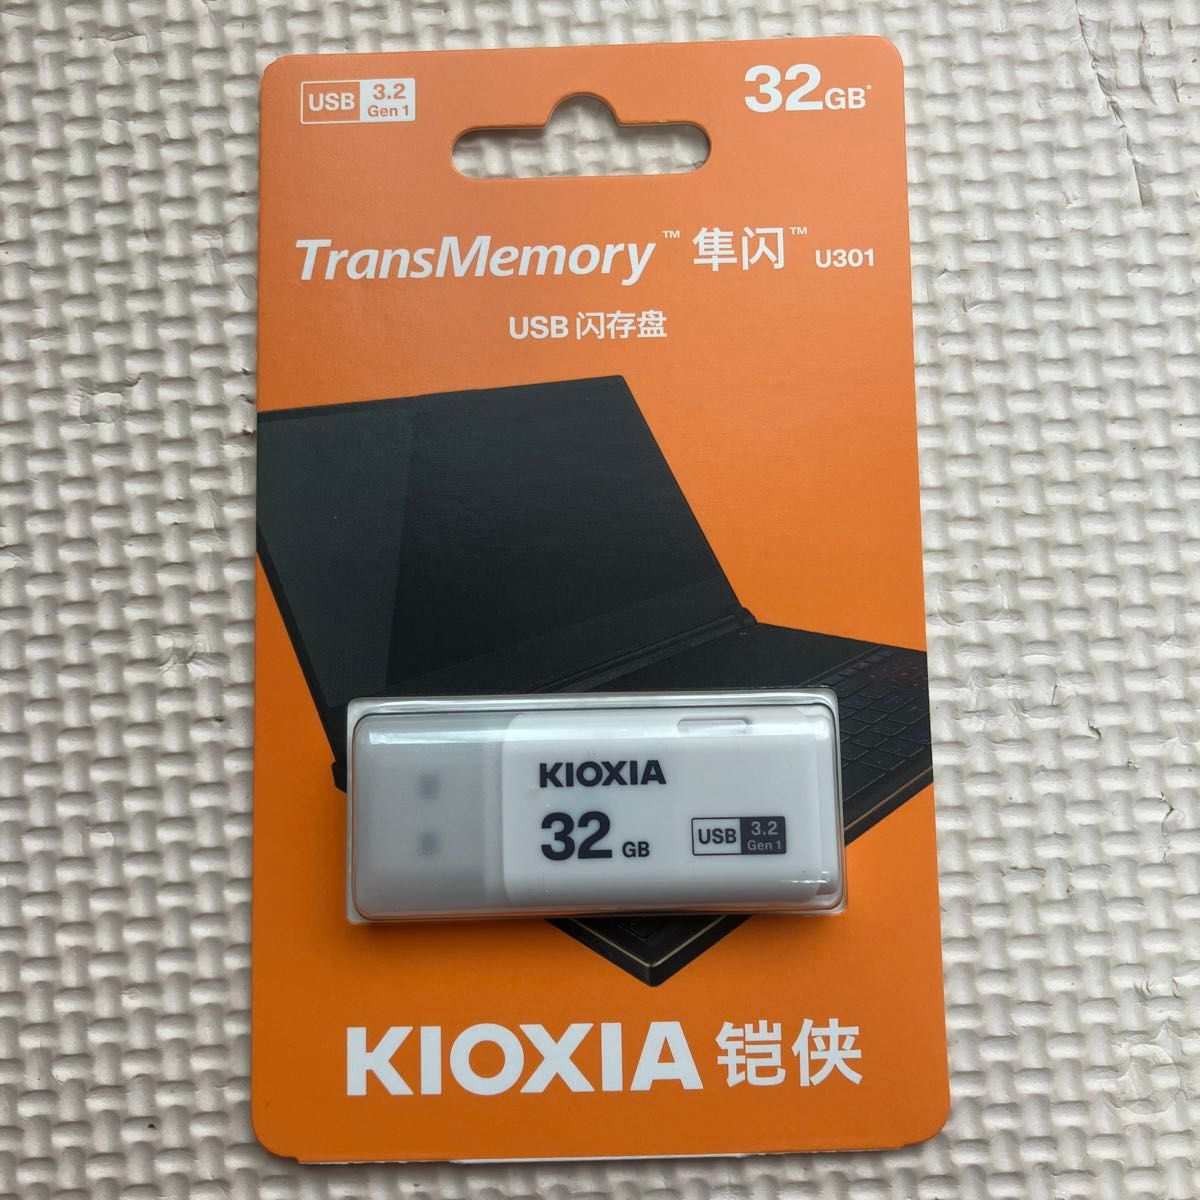 TransMemory U301 LU301W032GC4 （32GB ホワイト 海外パッケージ品）